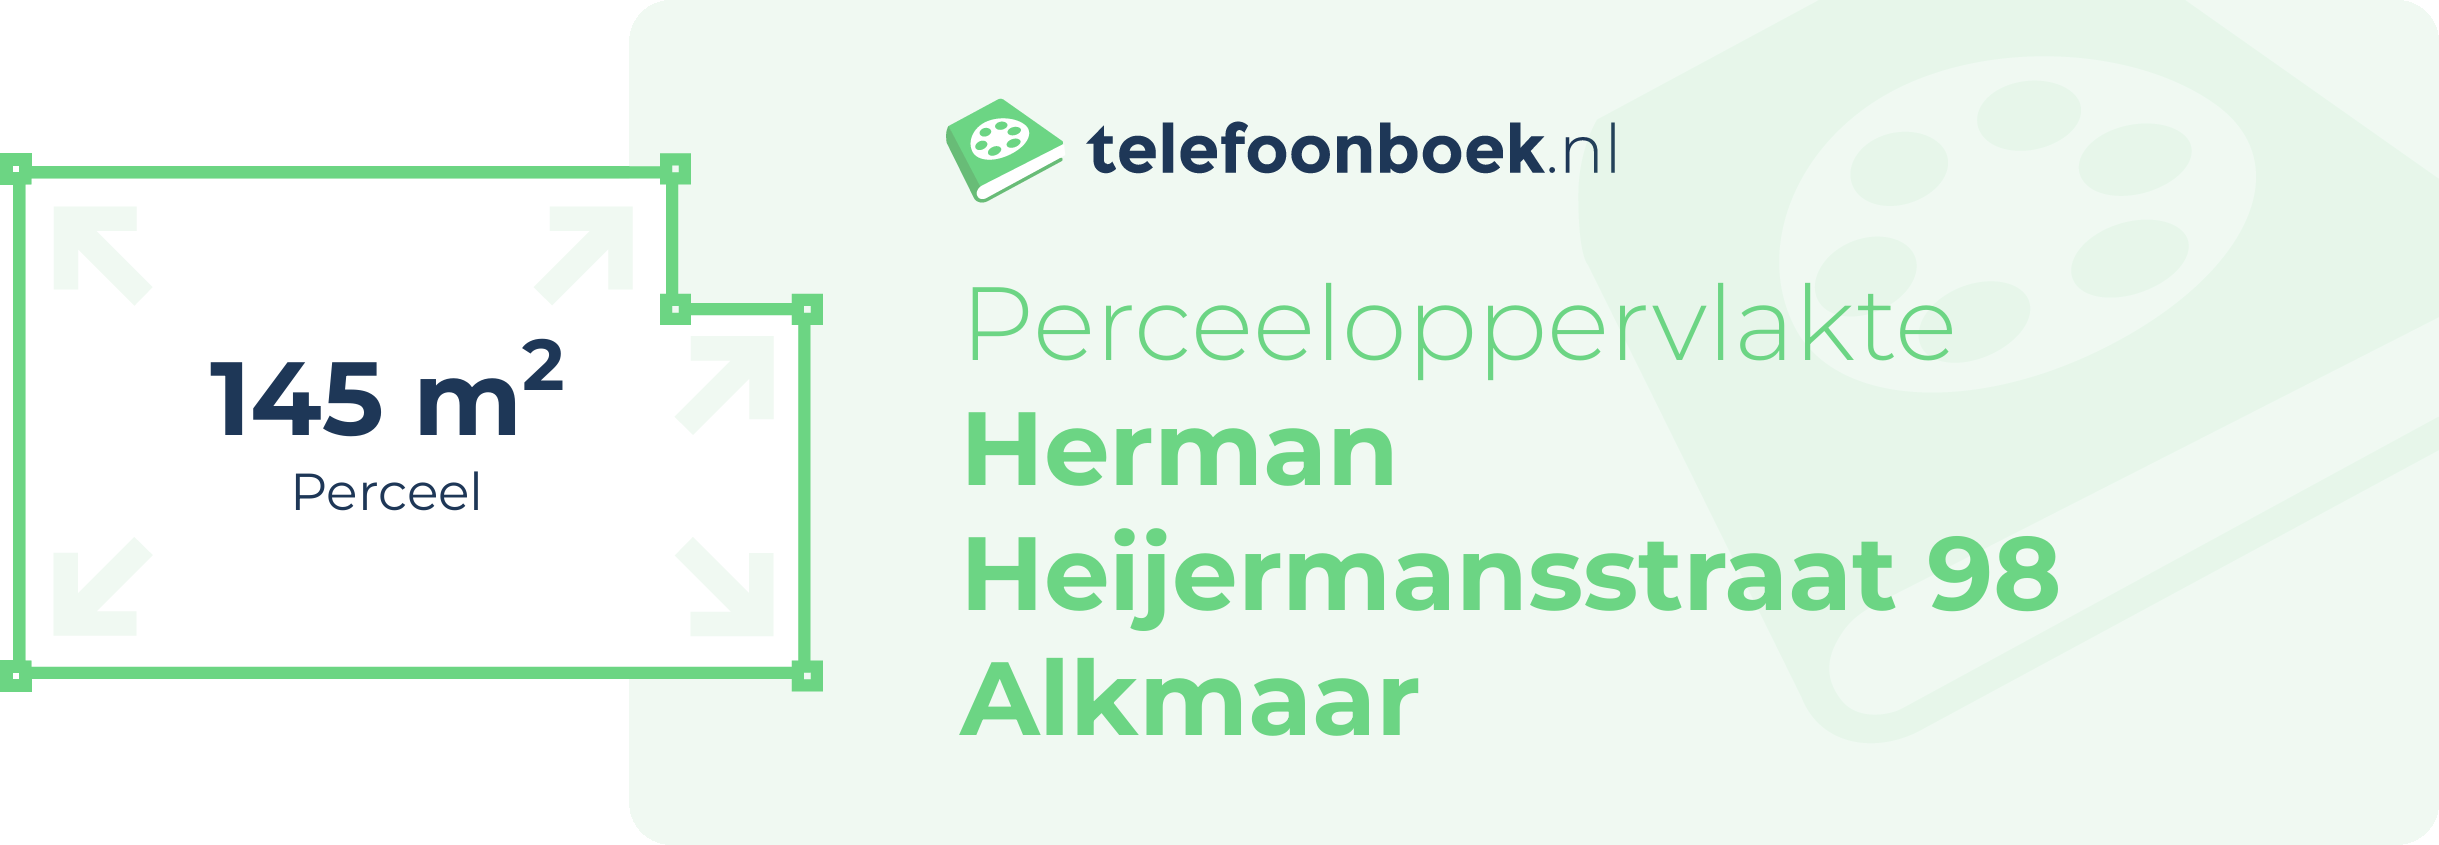 Perceeloppervlakte Herman Heijermansstraat 98 Alkmaar